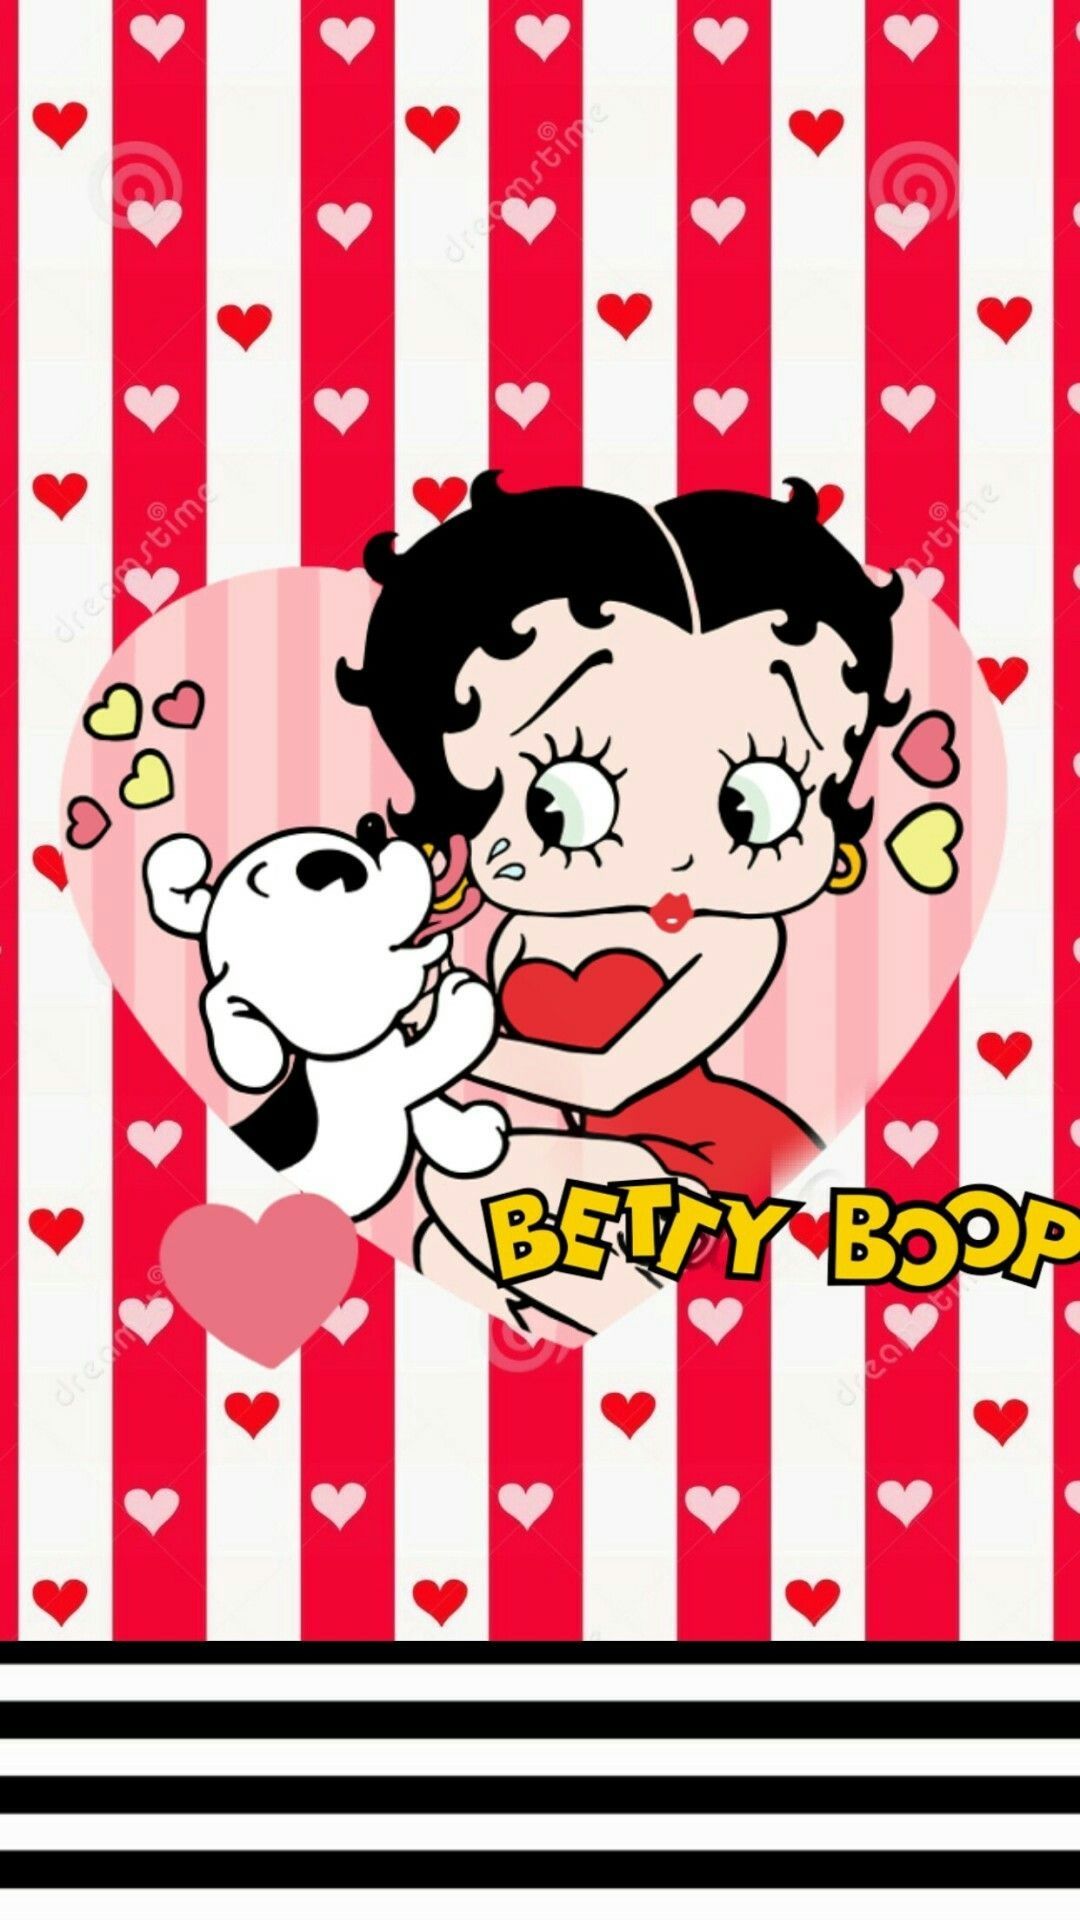 Betty Boop Desktop Wallpapers On Wallpaperdog